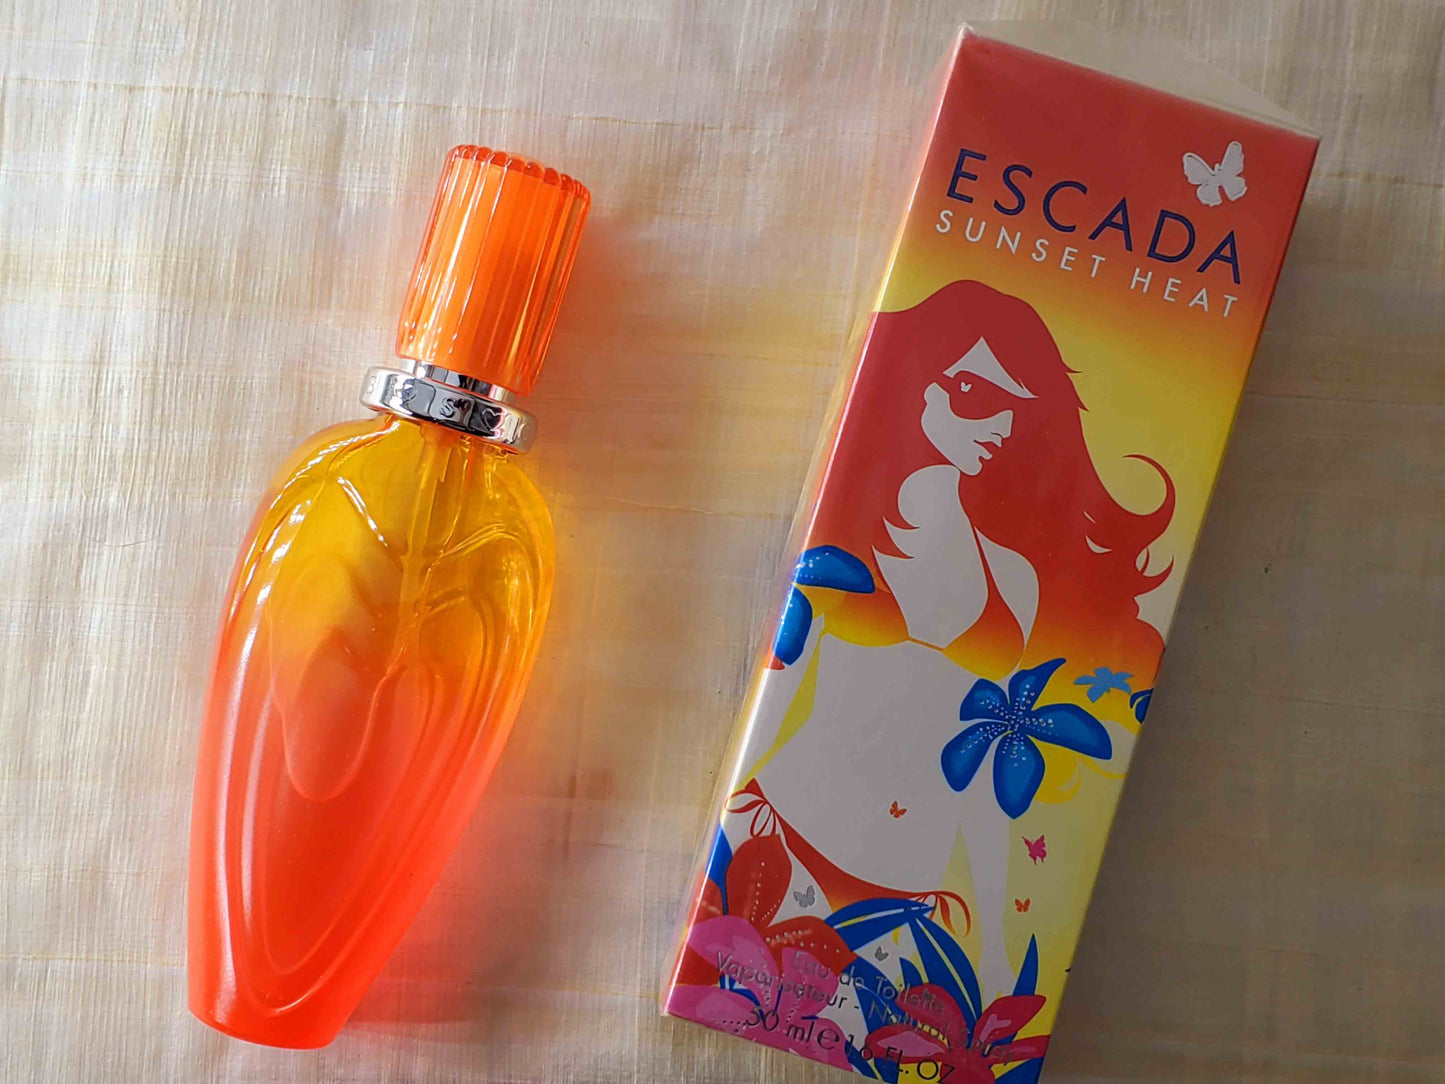 Sunset Heat Escada for women EDT Spray 50 ml 1.7 oz, Rare, Vintage